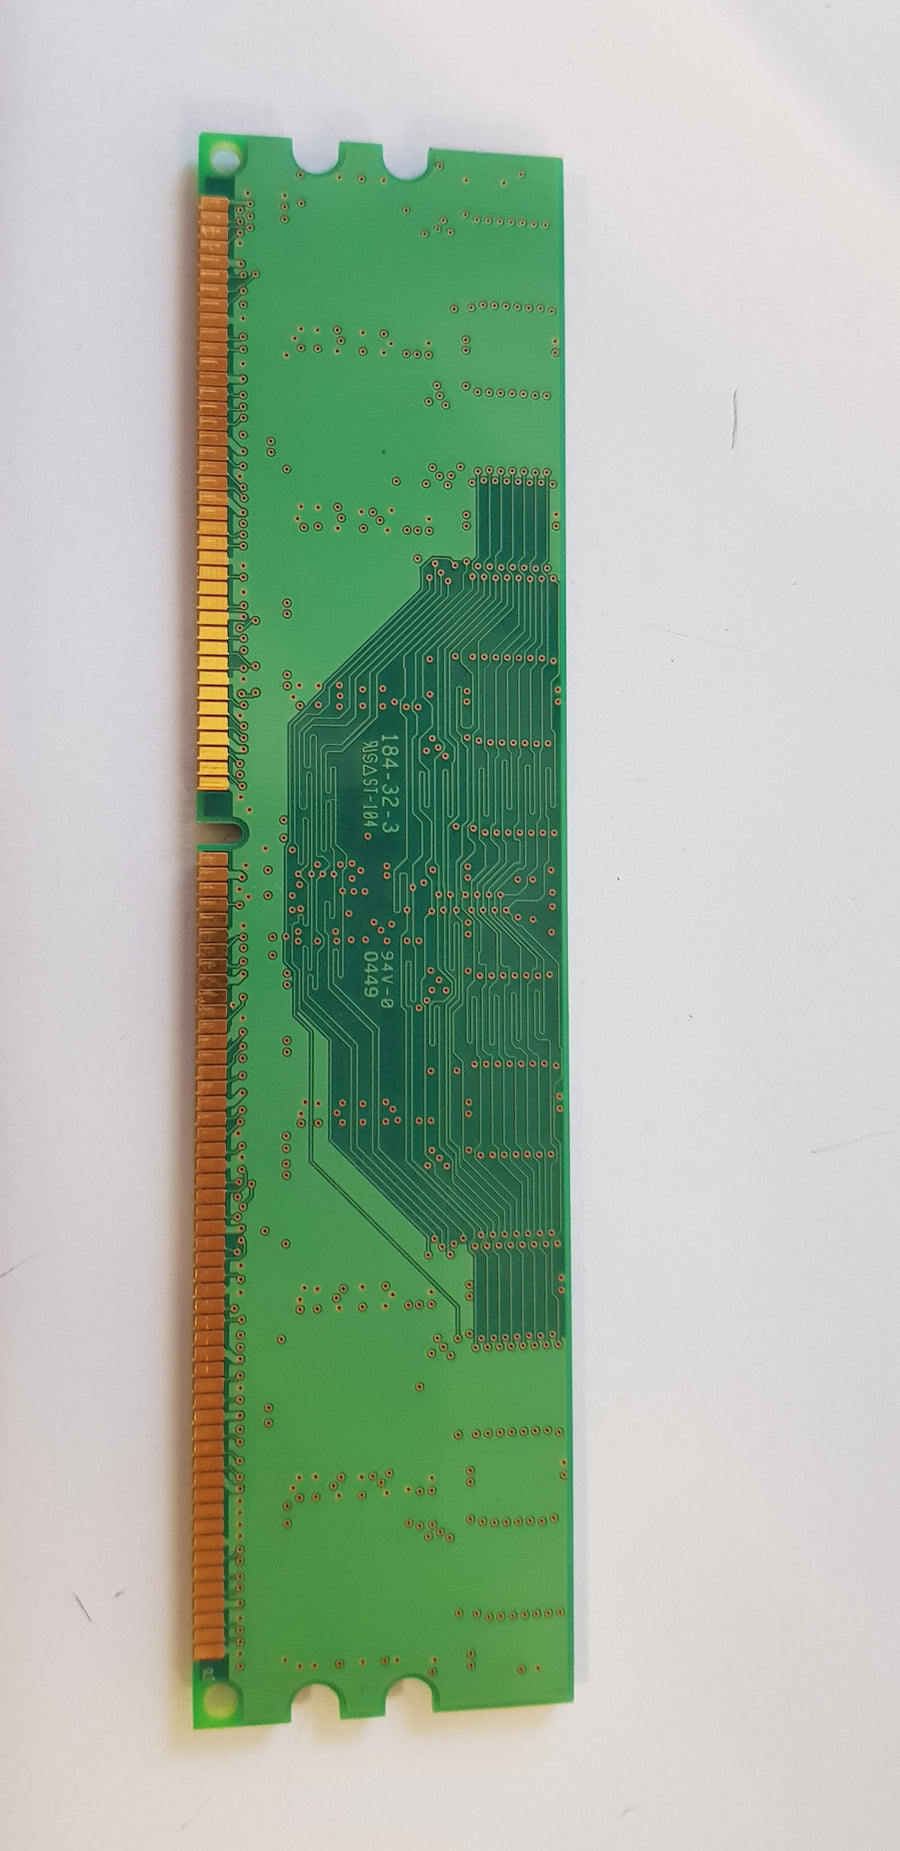 Infineon / HP 256MB DDR CL2.5 PC2700U nonECC SDRAM DIMM (HYS64D32300HU-6-C / 305957-041)